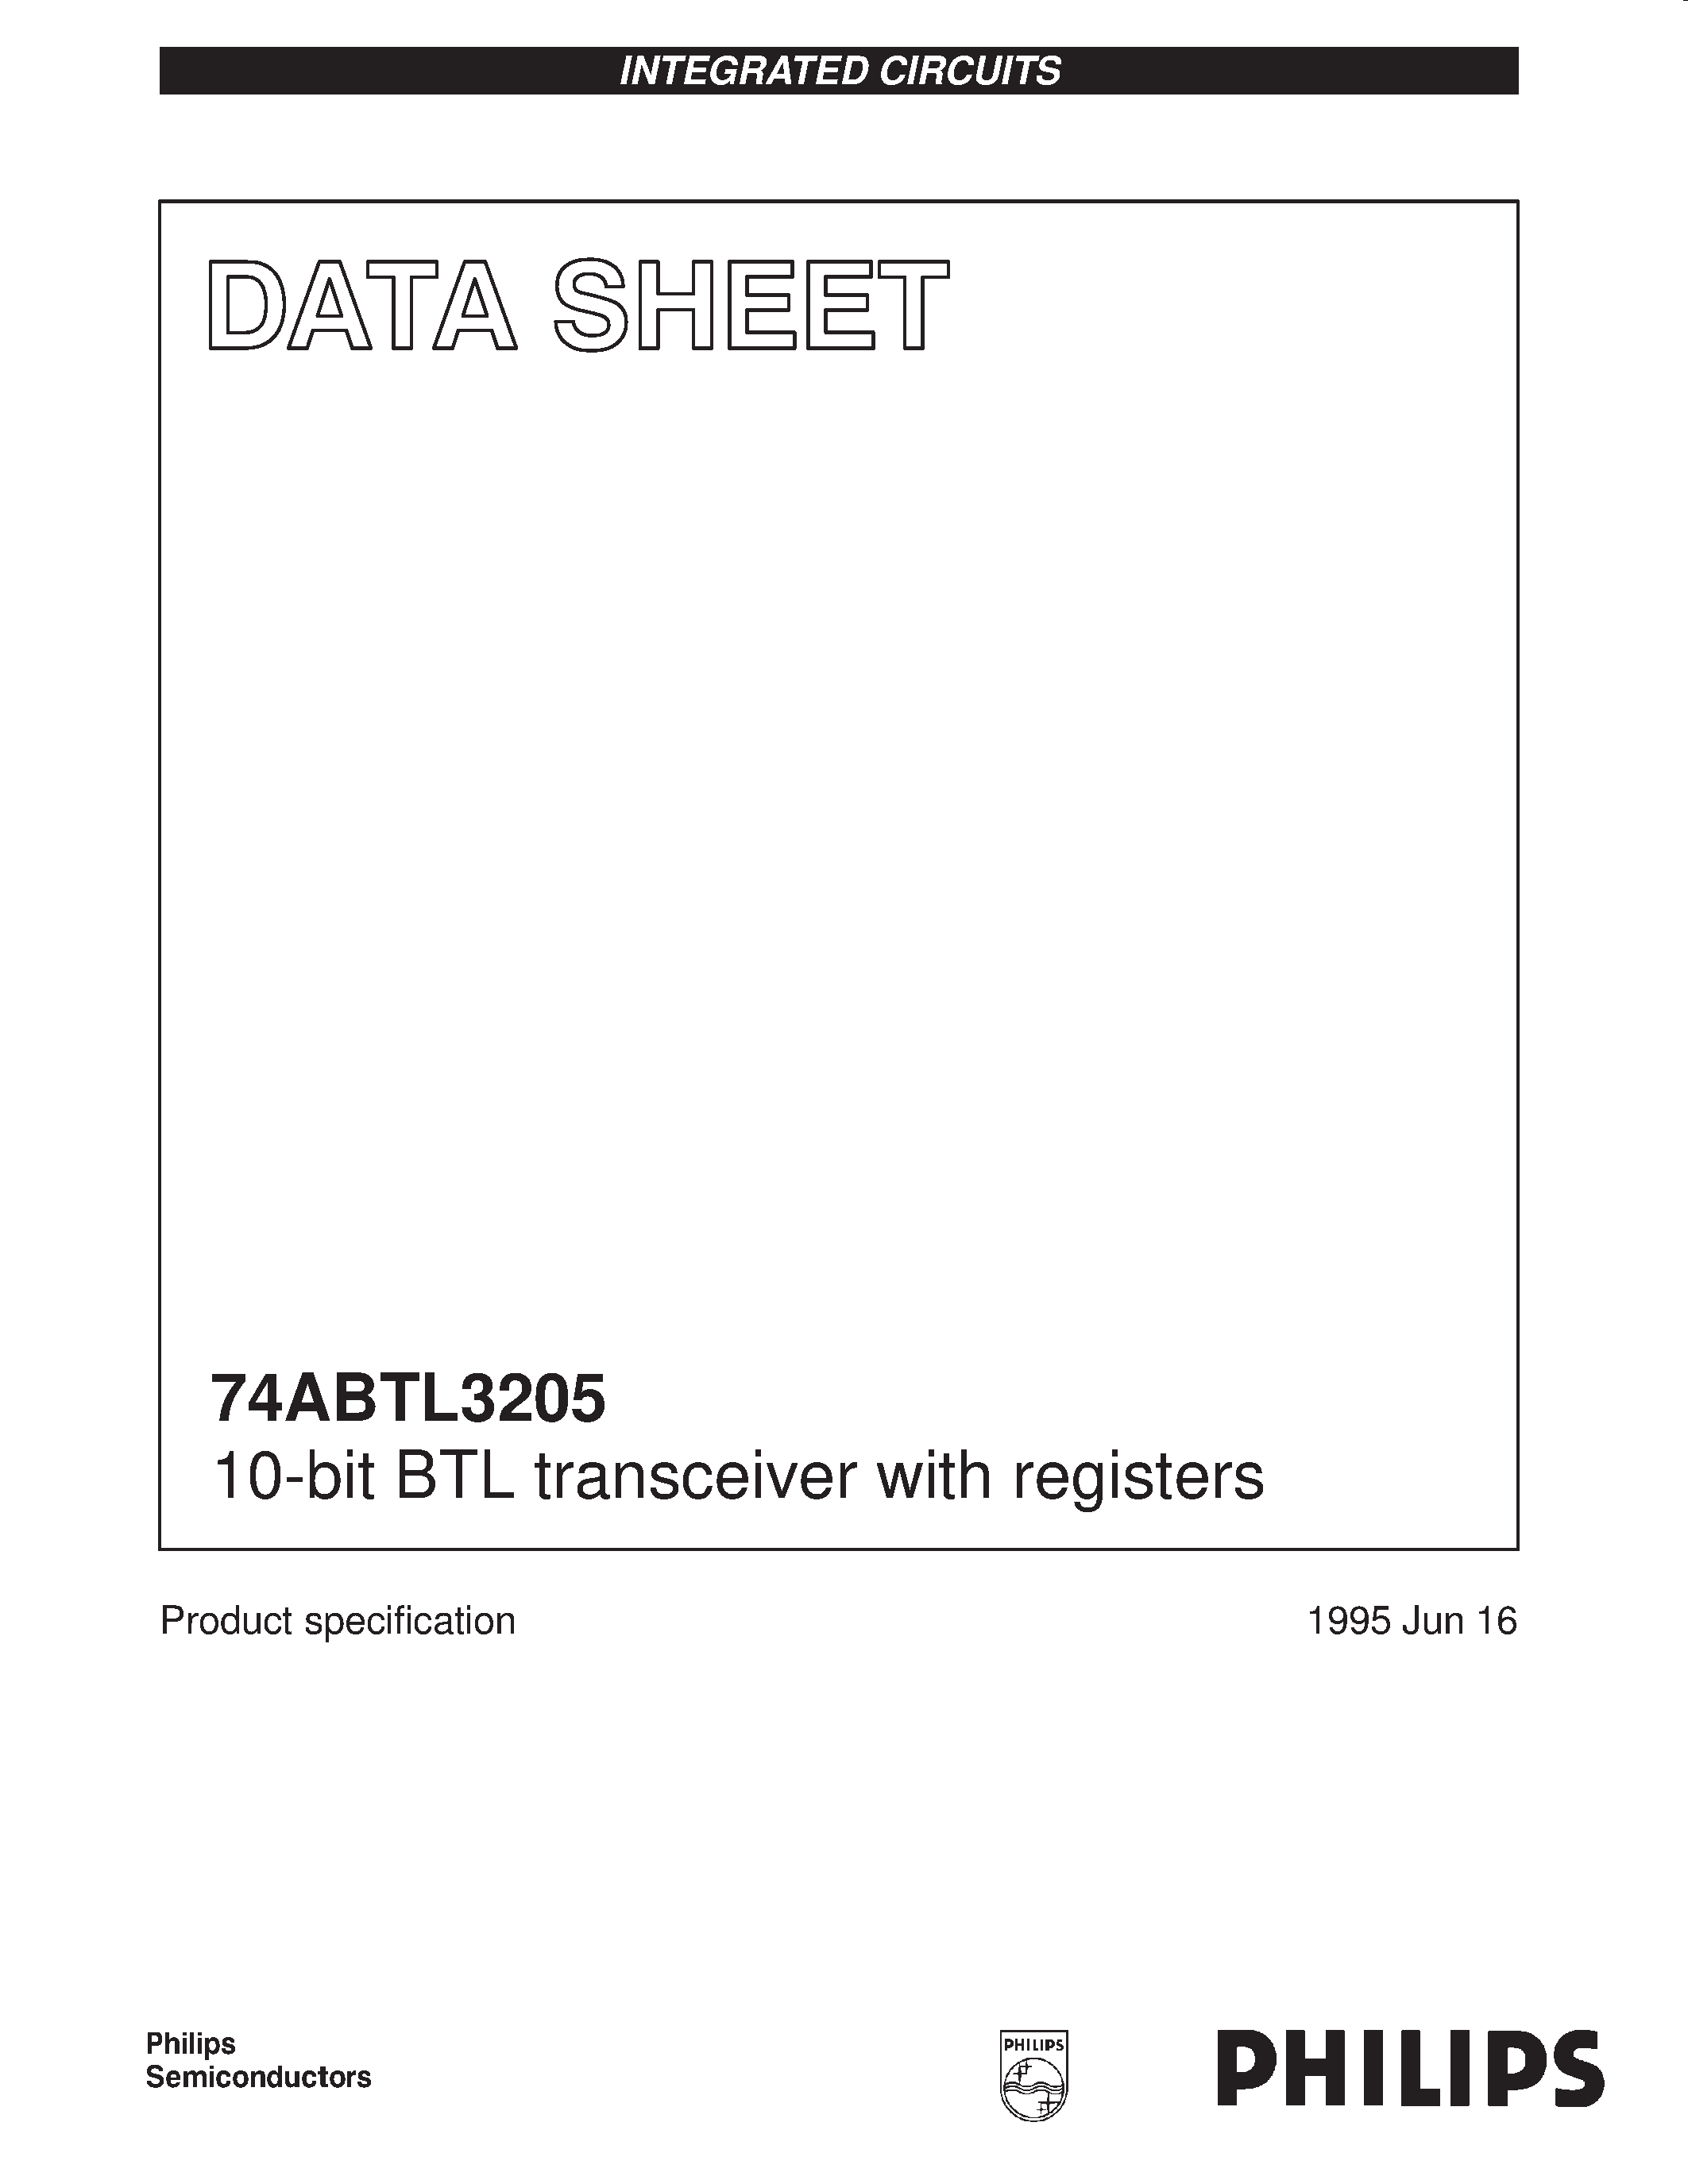 Datasheet 74AC00 - QUAD 2-INPUT NAND GATE page 1